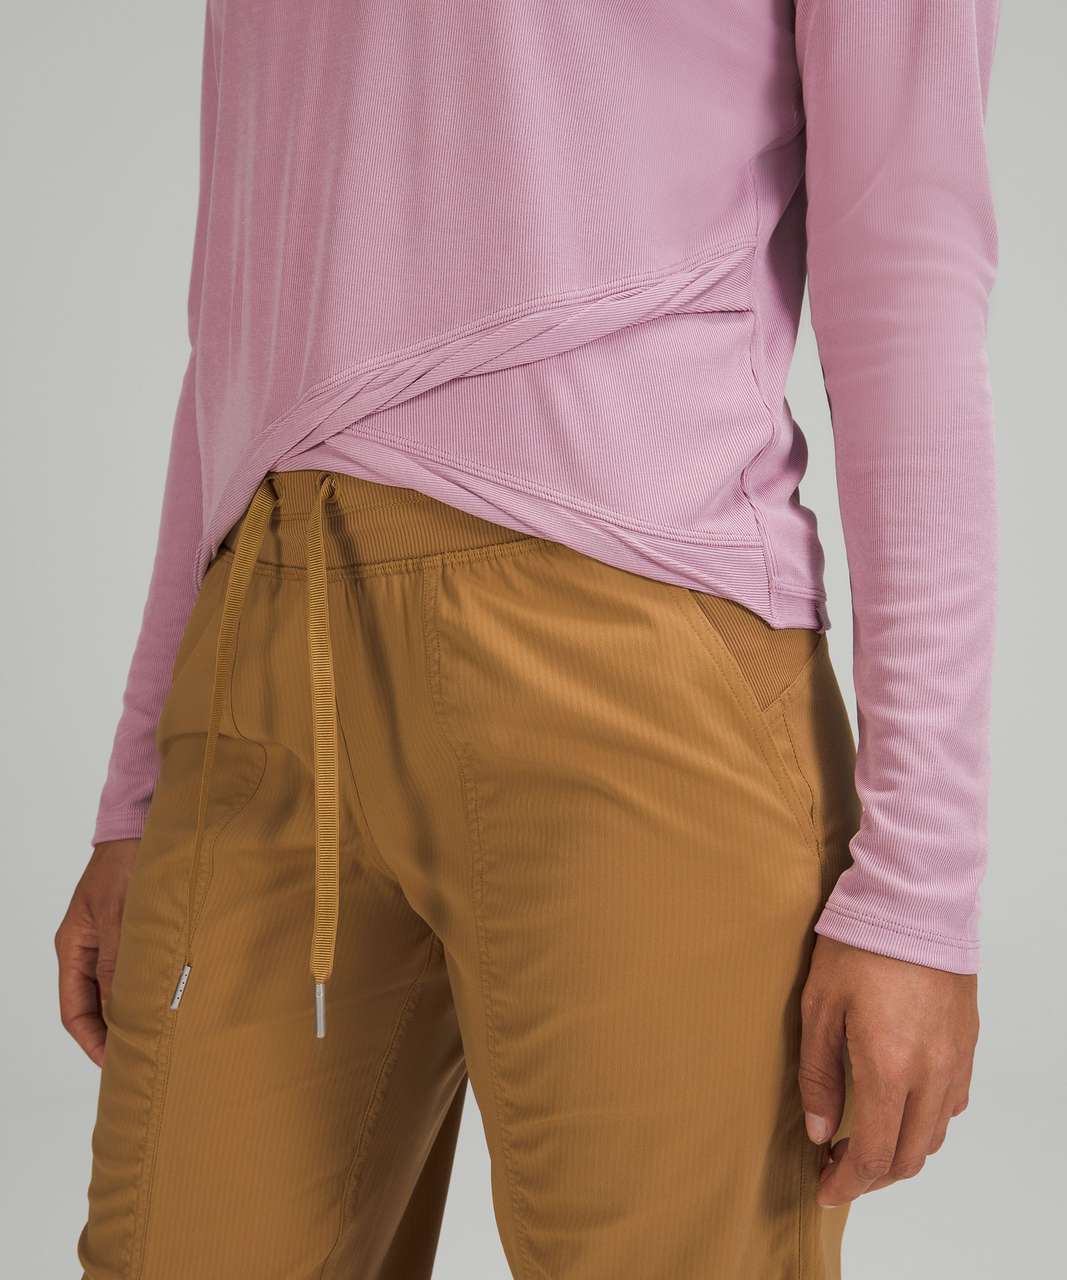 Lululemon Do the Twist Long Sleeve Shirt - Pink Taupe